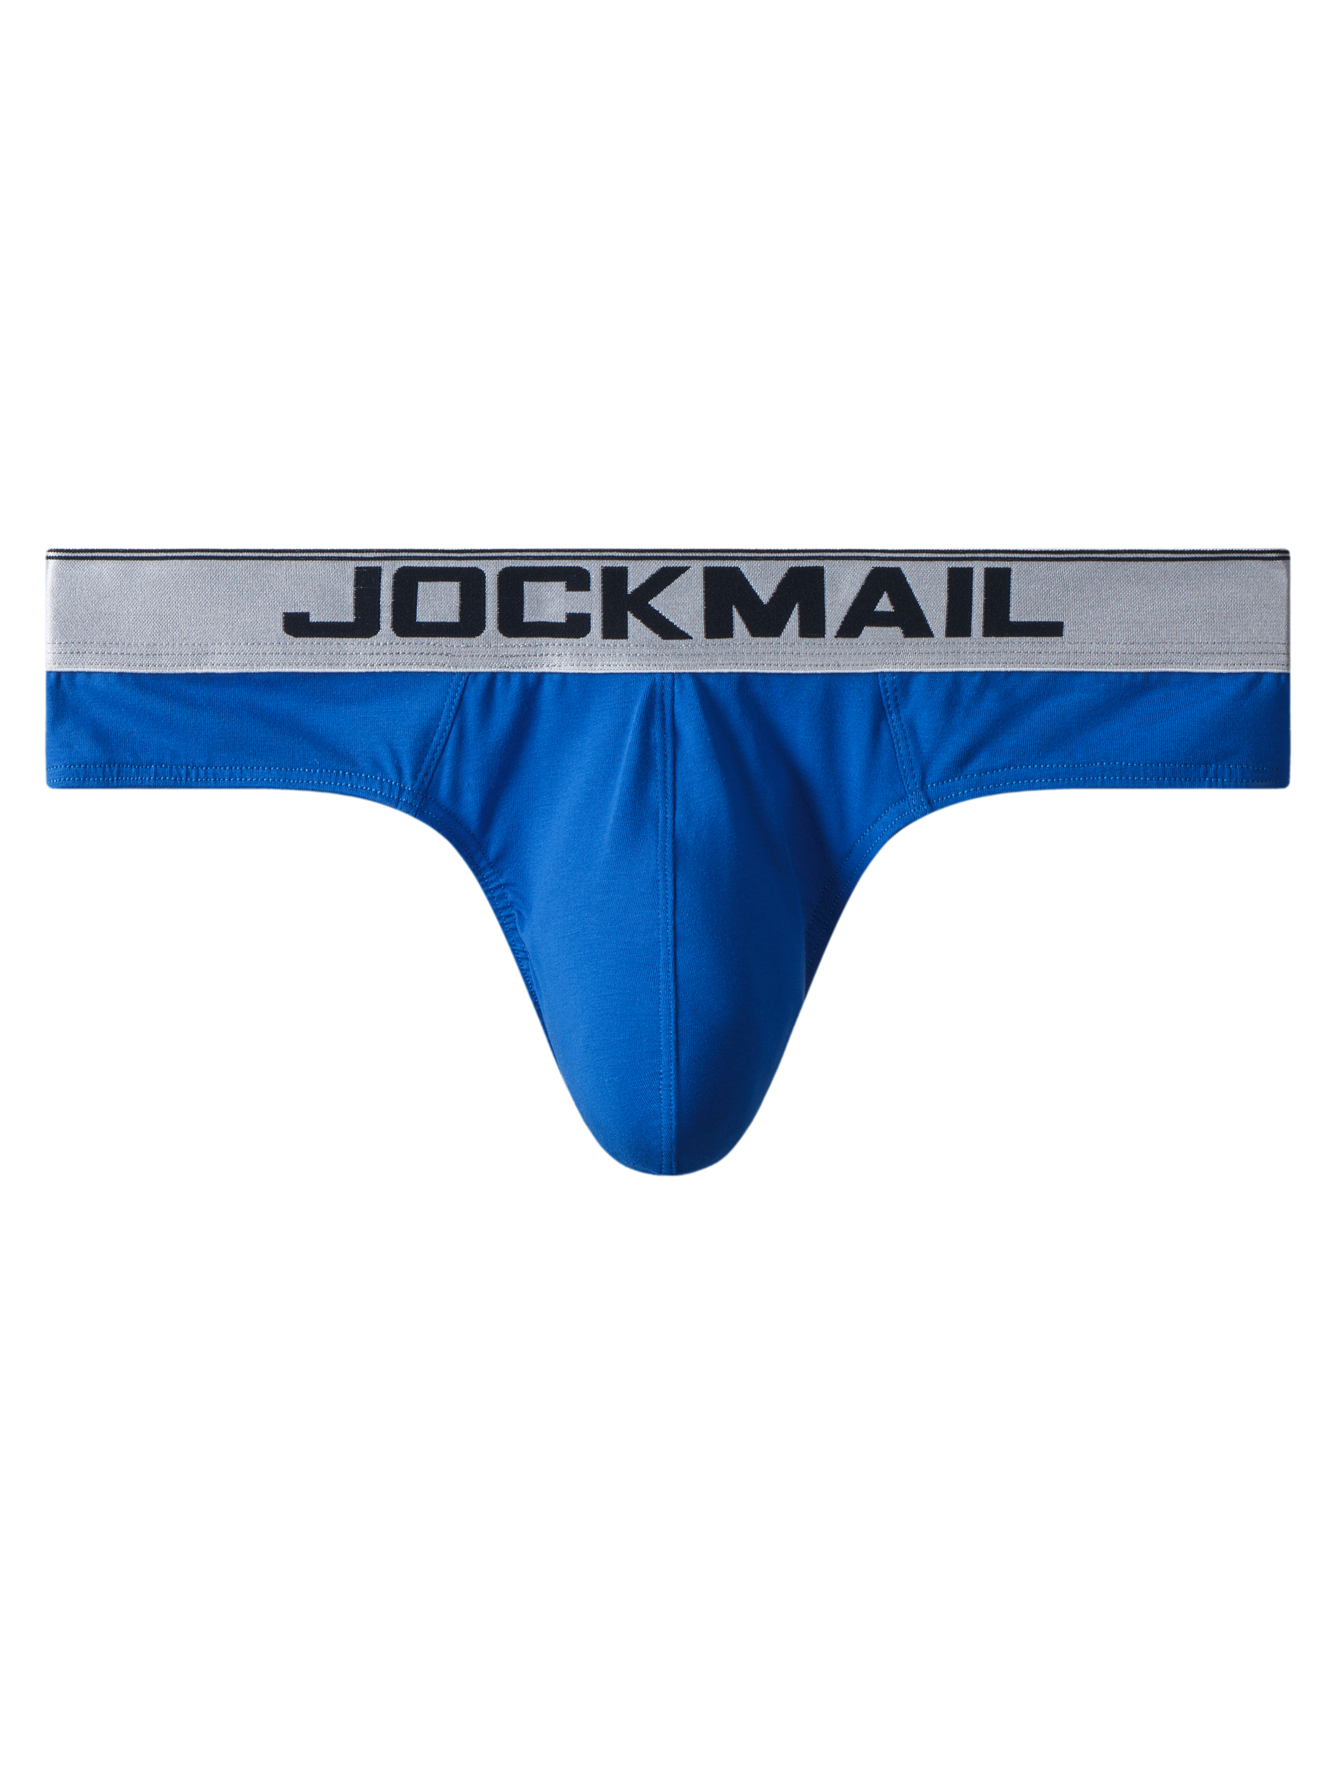 Jockmail Sexy Men's Cotton Underwear High Cut Sport Pouch Briefs Tanga  Panties